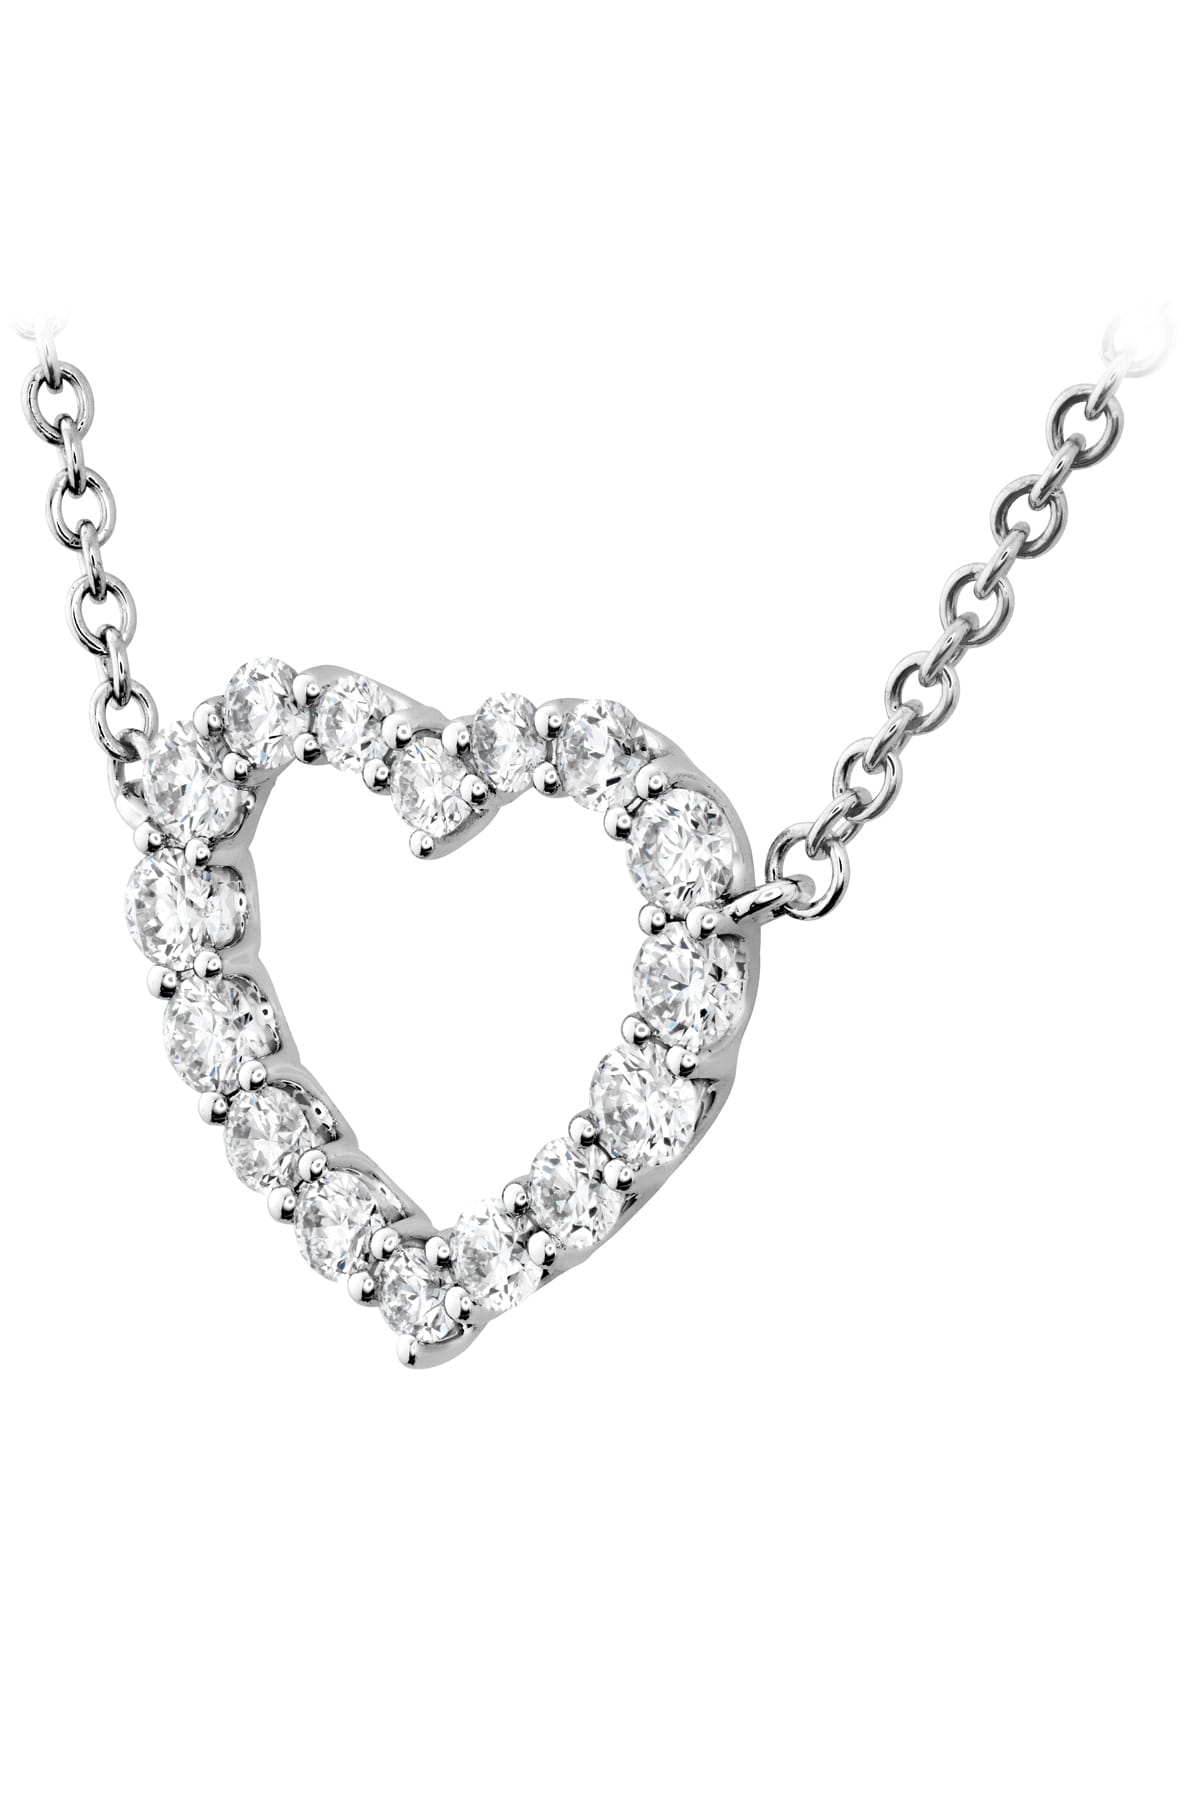 Signature Heart Pendant - Medium From Hearts On Fire available at LeGassick Diamonds and Jewellery Gold Coast, Australia.